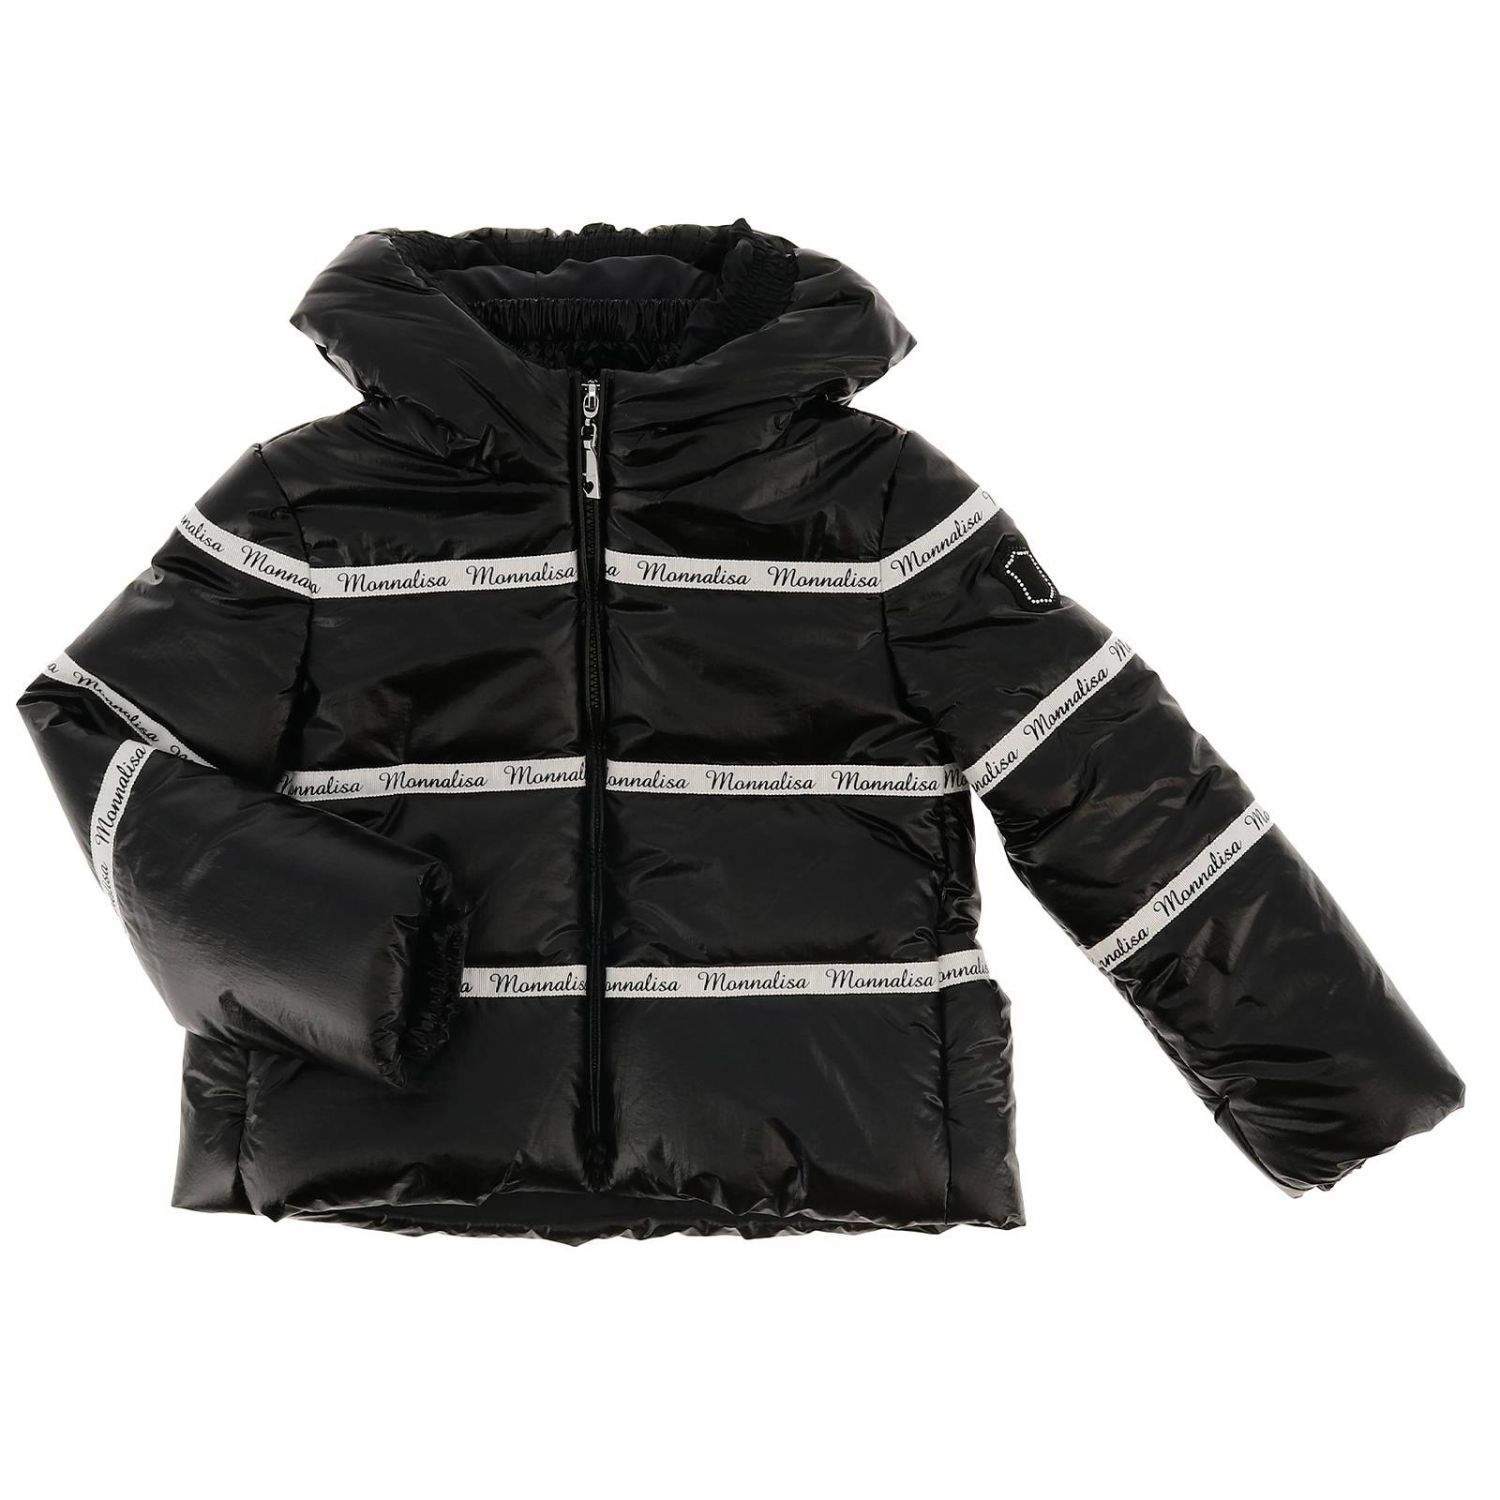 Monnalisa Outlet: jacket for girls - Black | Monnalisa jacket 174115 ...